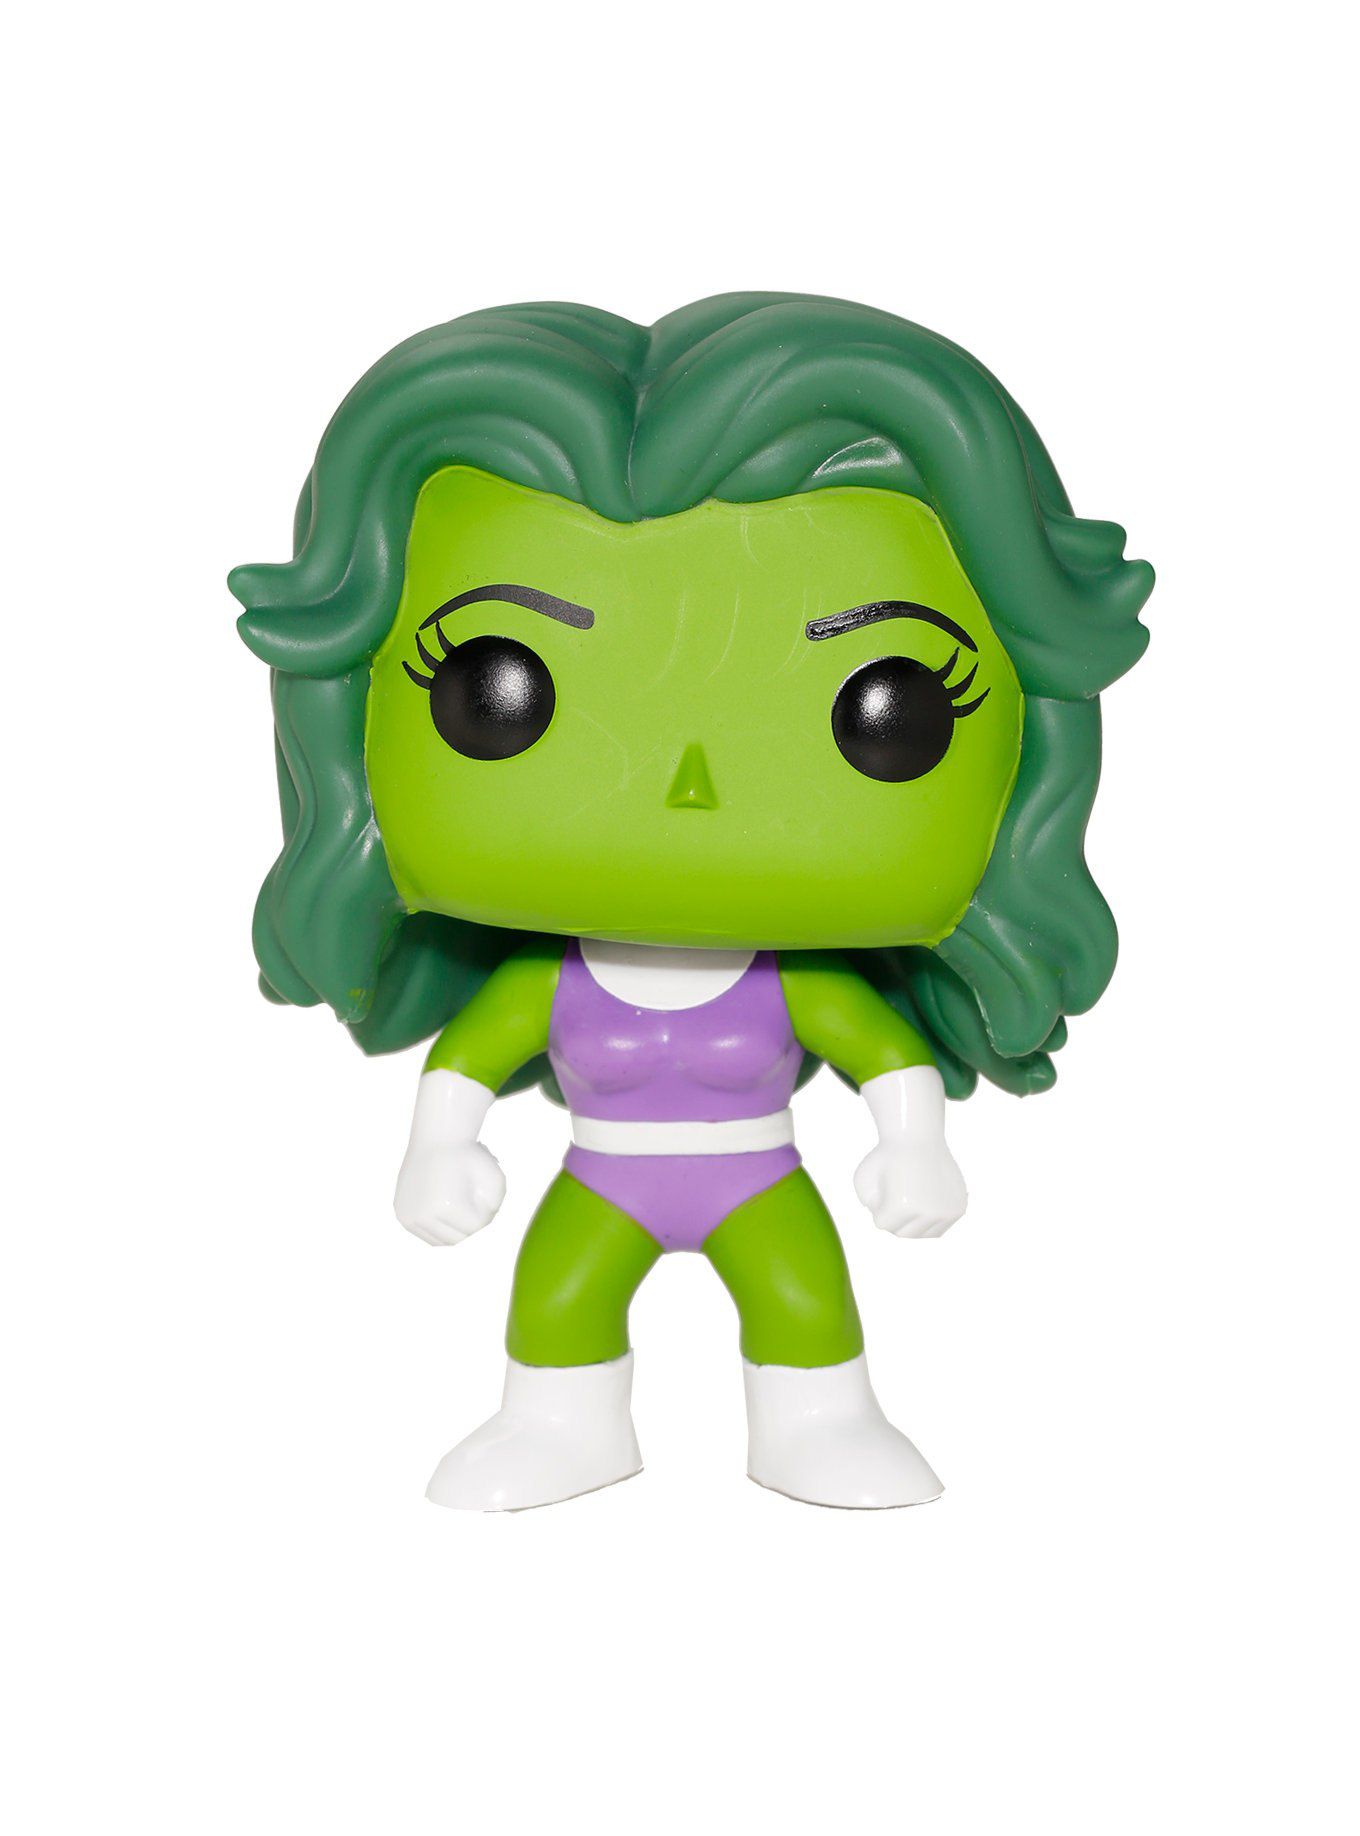 She Hulk #147 ( Mulher Hulk ) - Funko Pop! Marvel